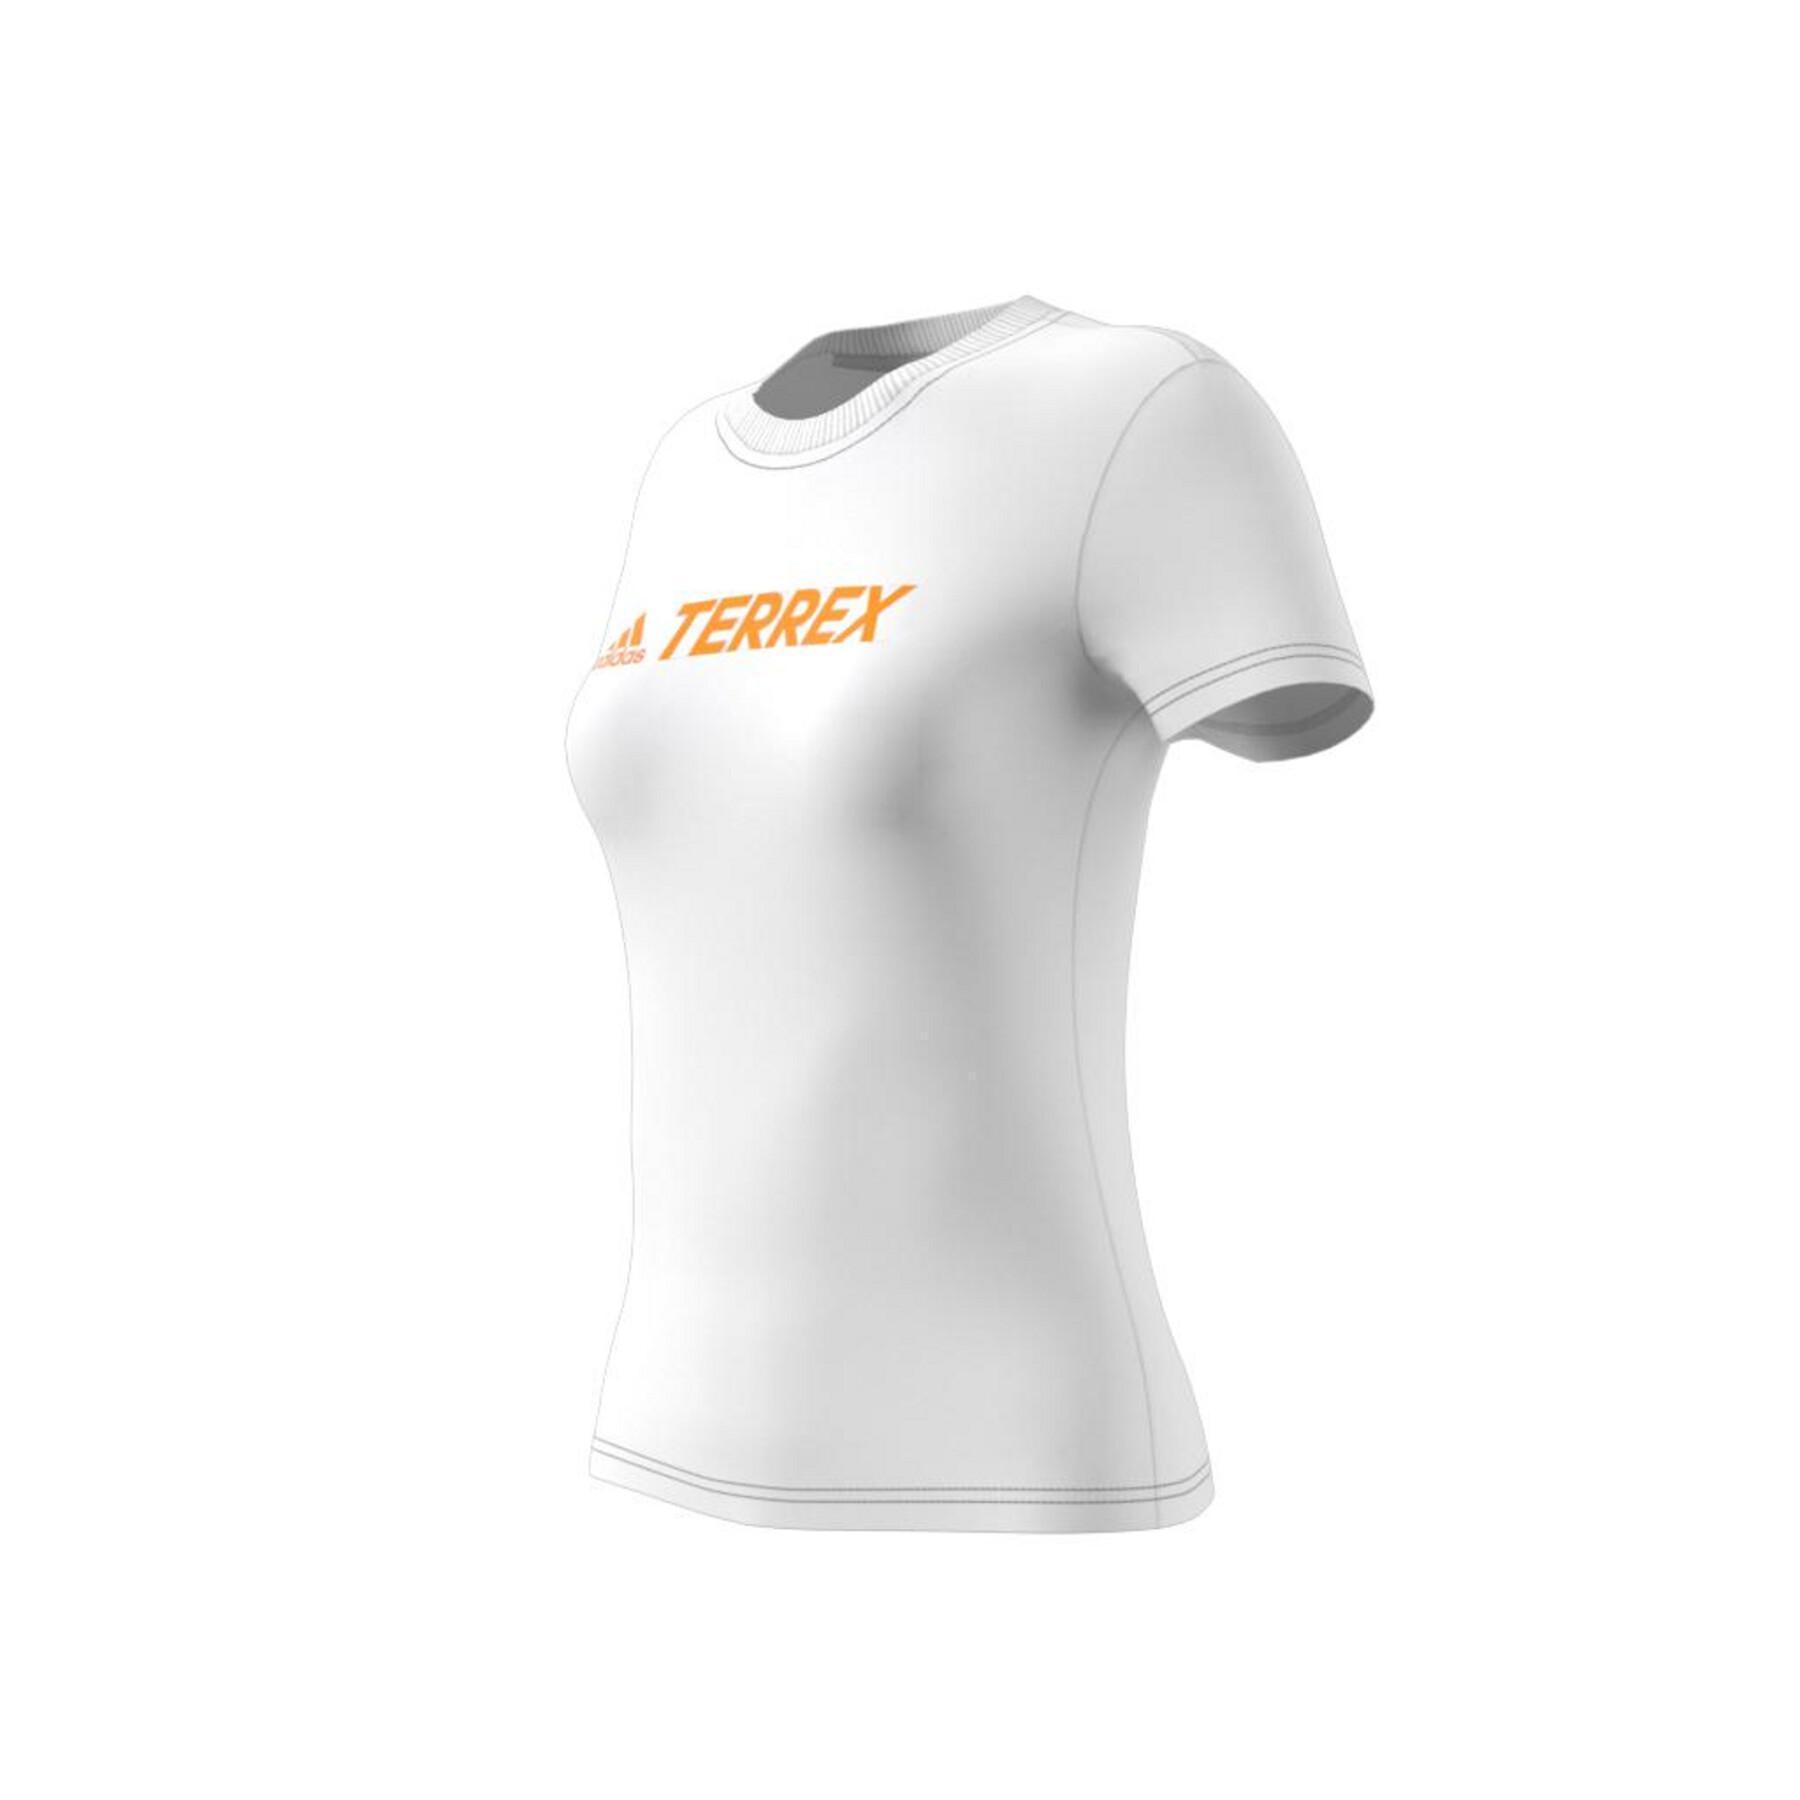 Camiseta de mujer adidas Terrex Logo